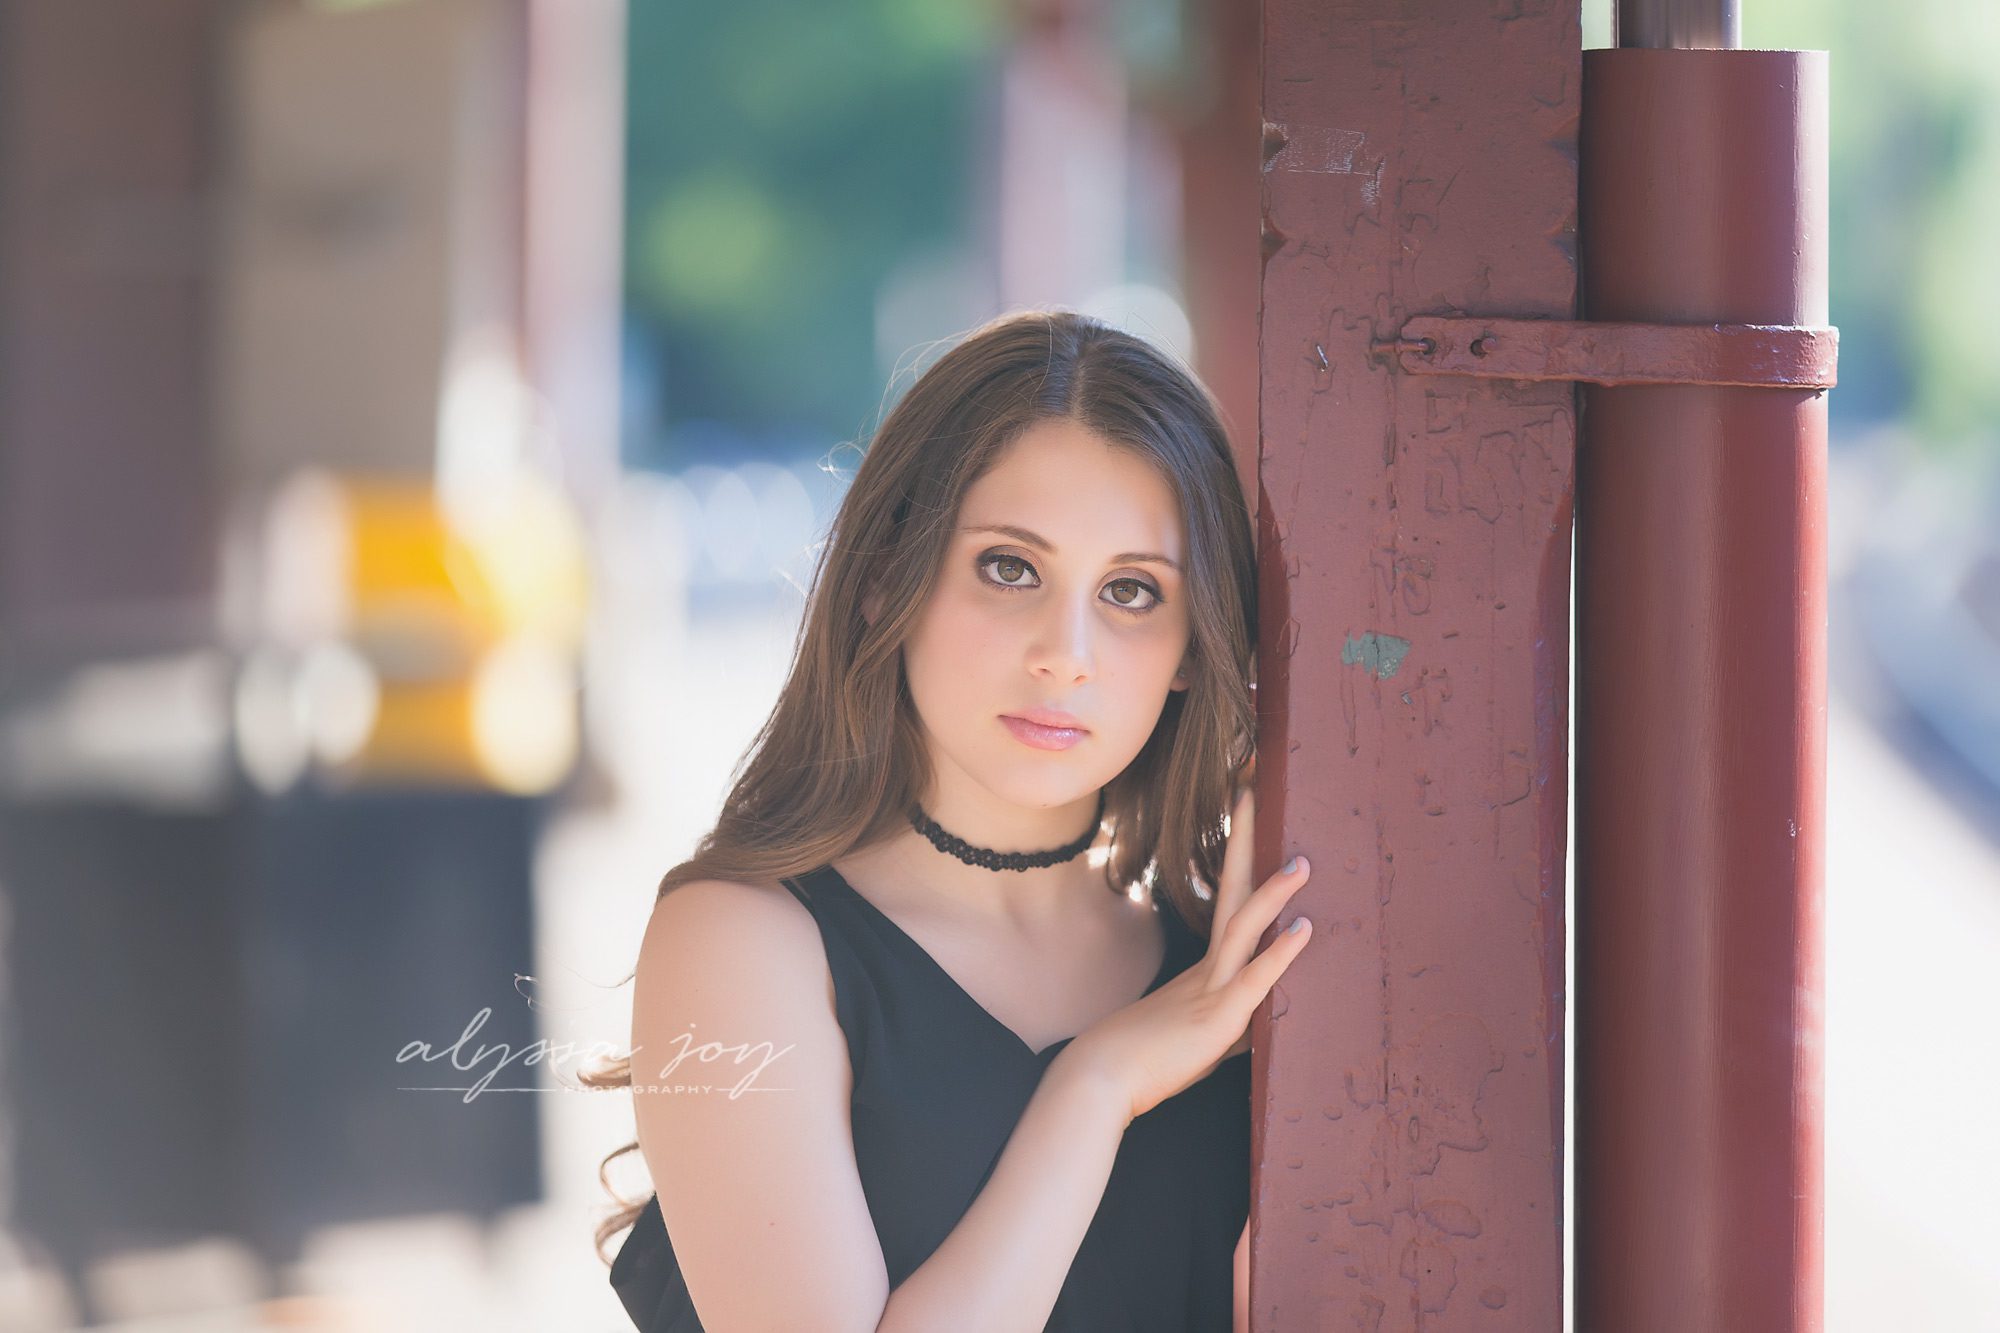 shot of teenage girl at train station Alyssa Joy Photography